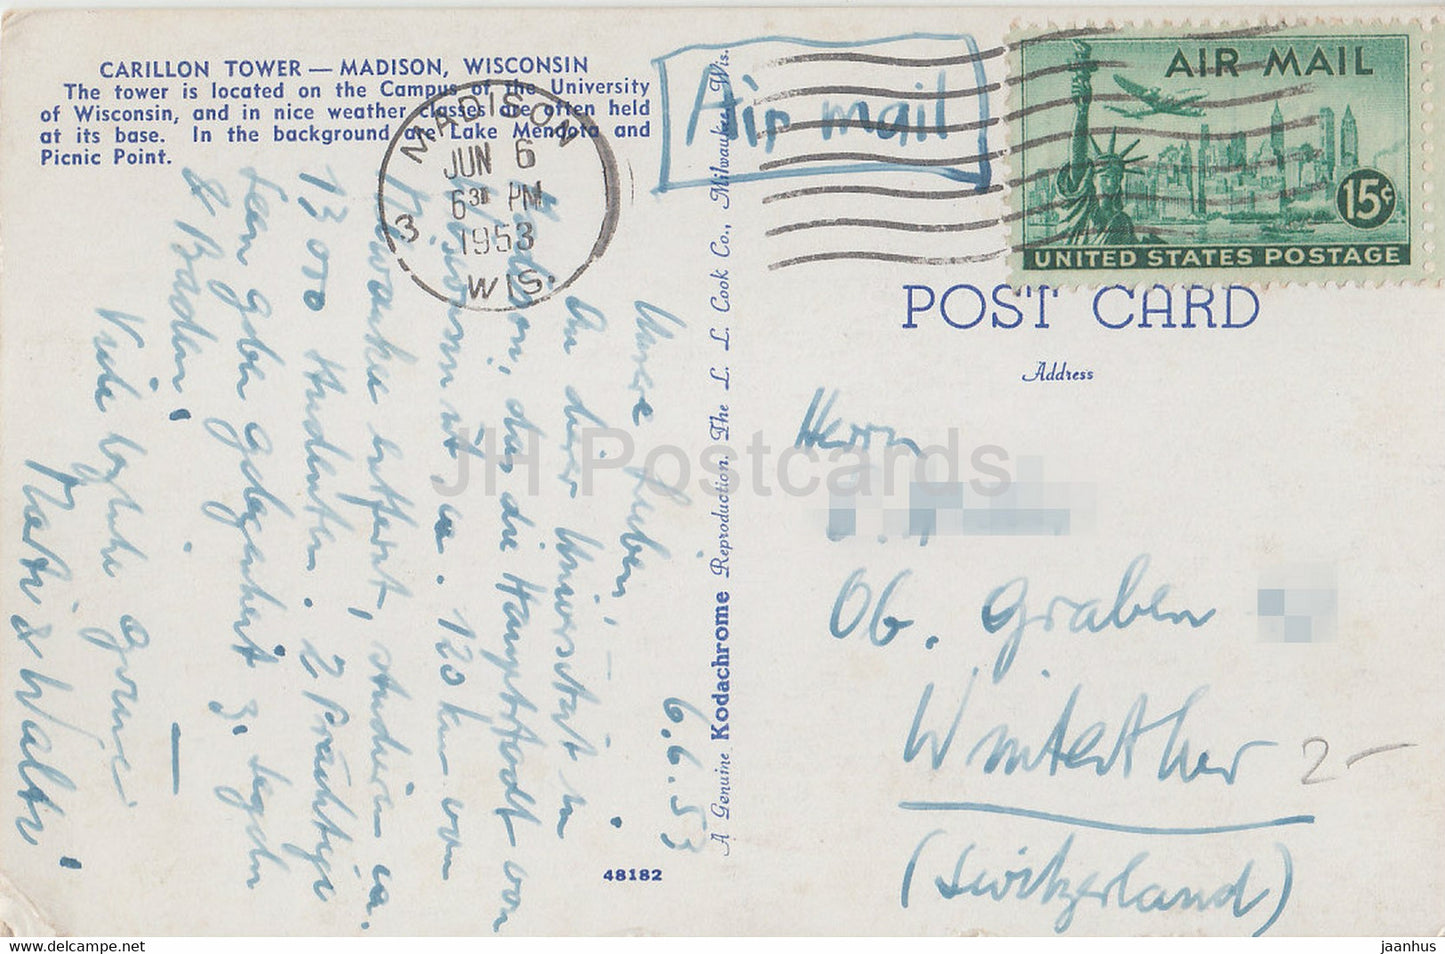 Madison - Carillon Tower - Wisconsin - carte postale ancienne - 1953 - USA - utilisé